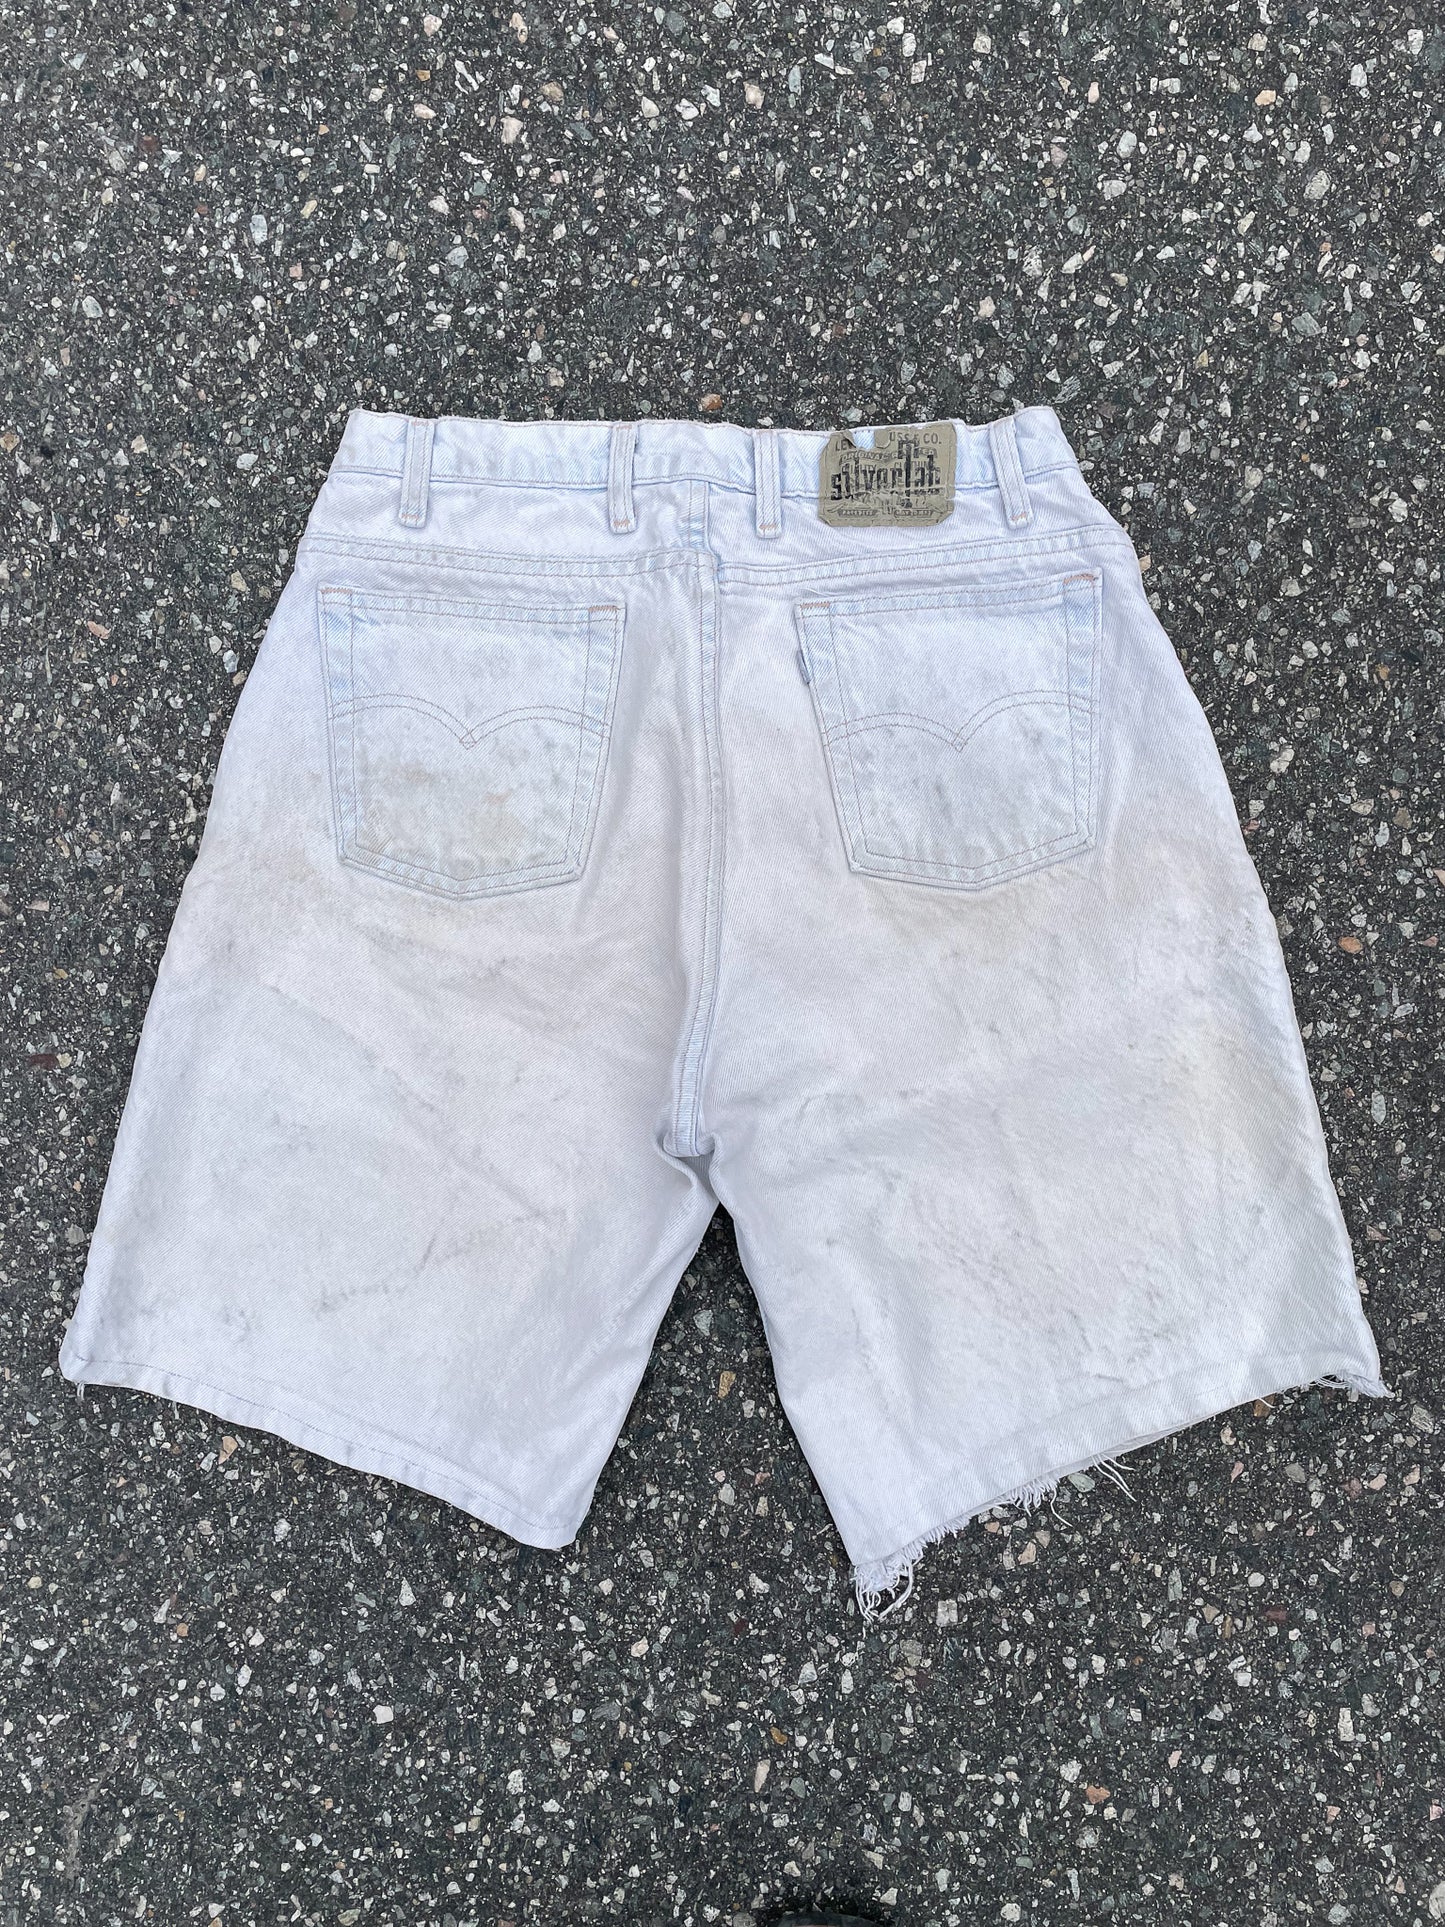 Levi's Silvertab Baggy Cutoff Jean Shorts—[30]